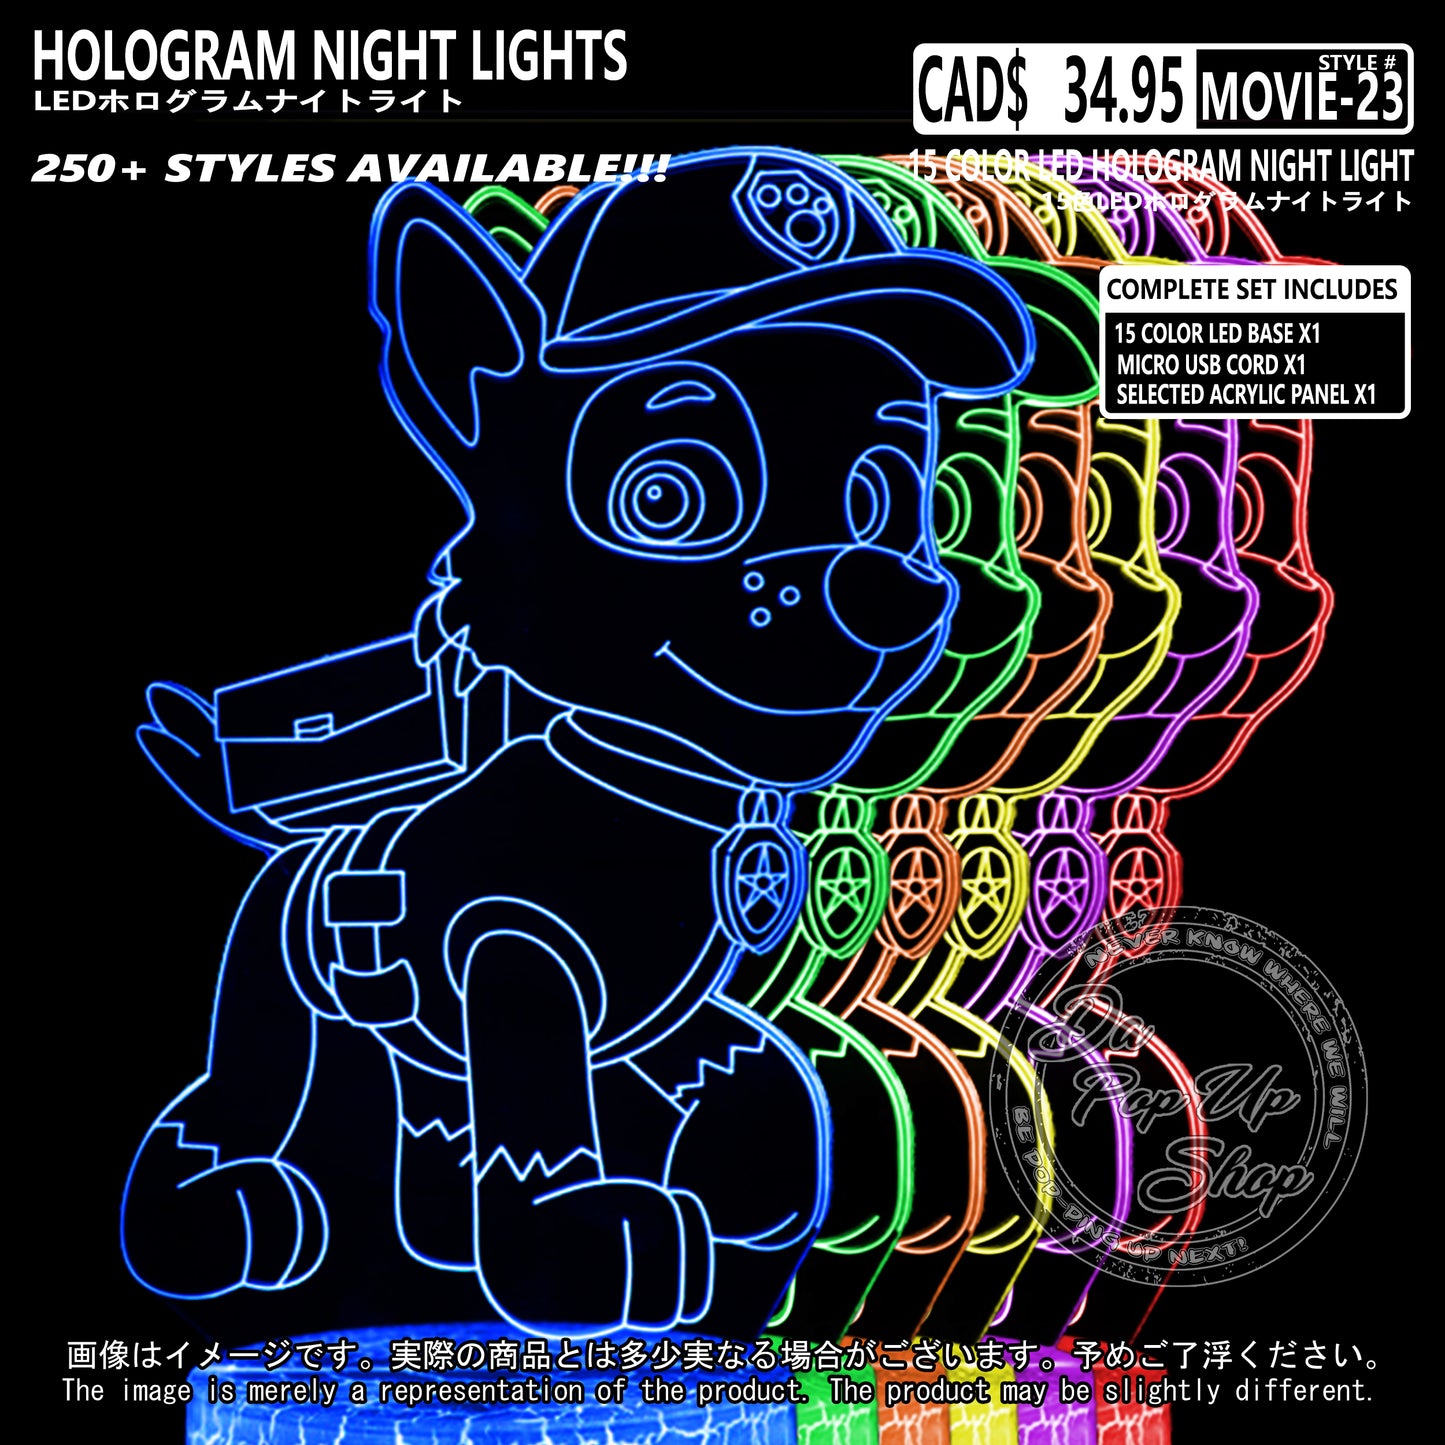 (MOVIE-23) ROCKY Paw Patrol Hologram LED Night Light